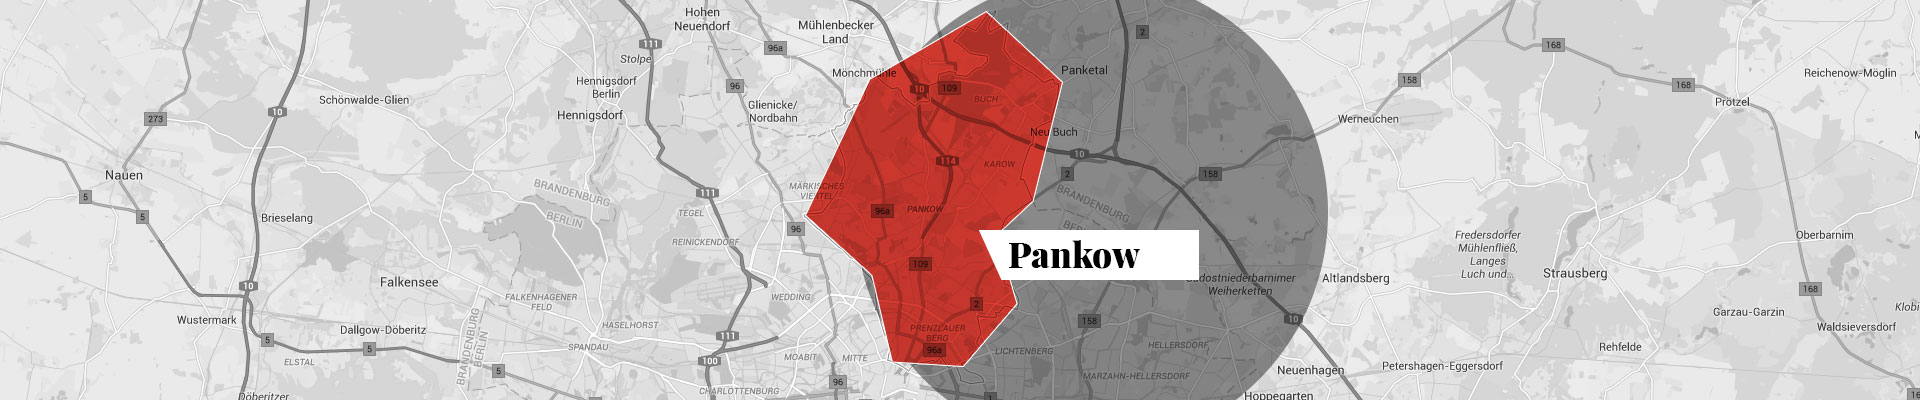 Pankow Stadtplan